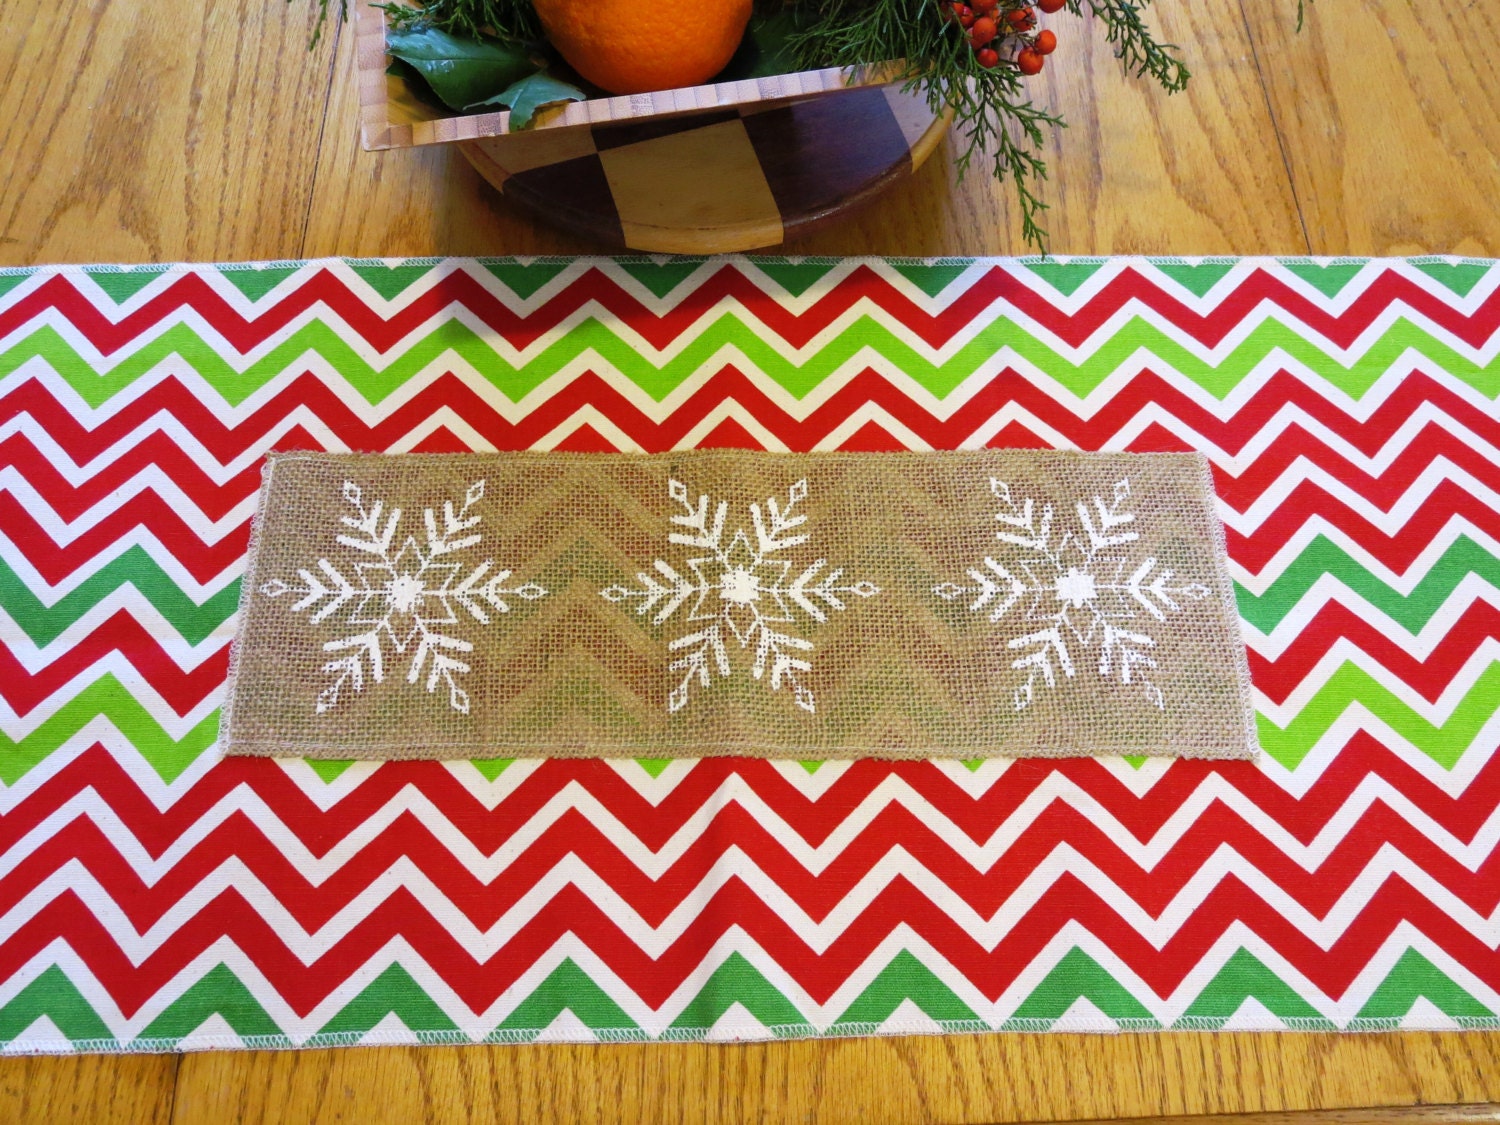 Christmas Table Runner in Chevron and Burlap Snowflakes, Christmas Decor